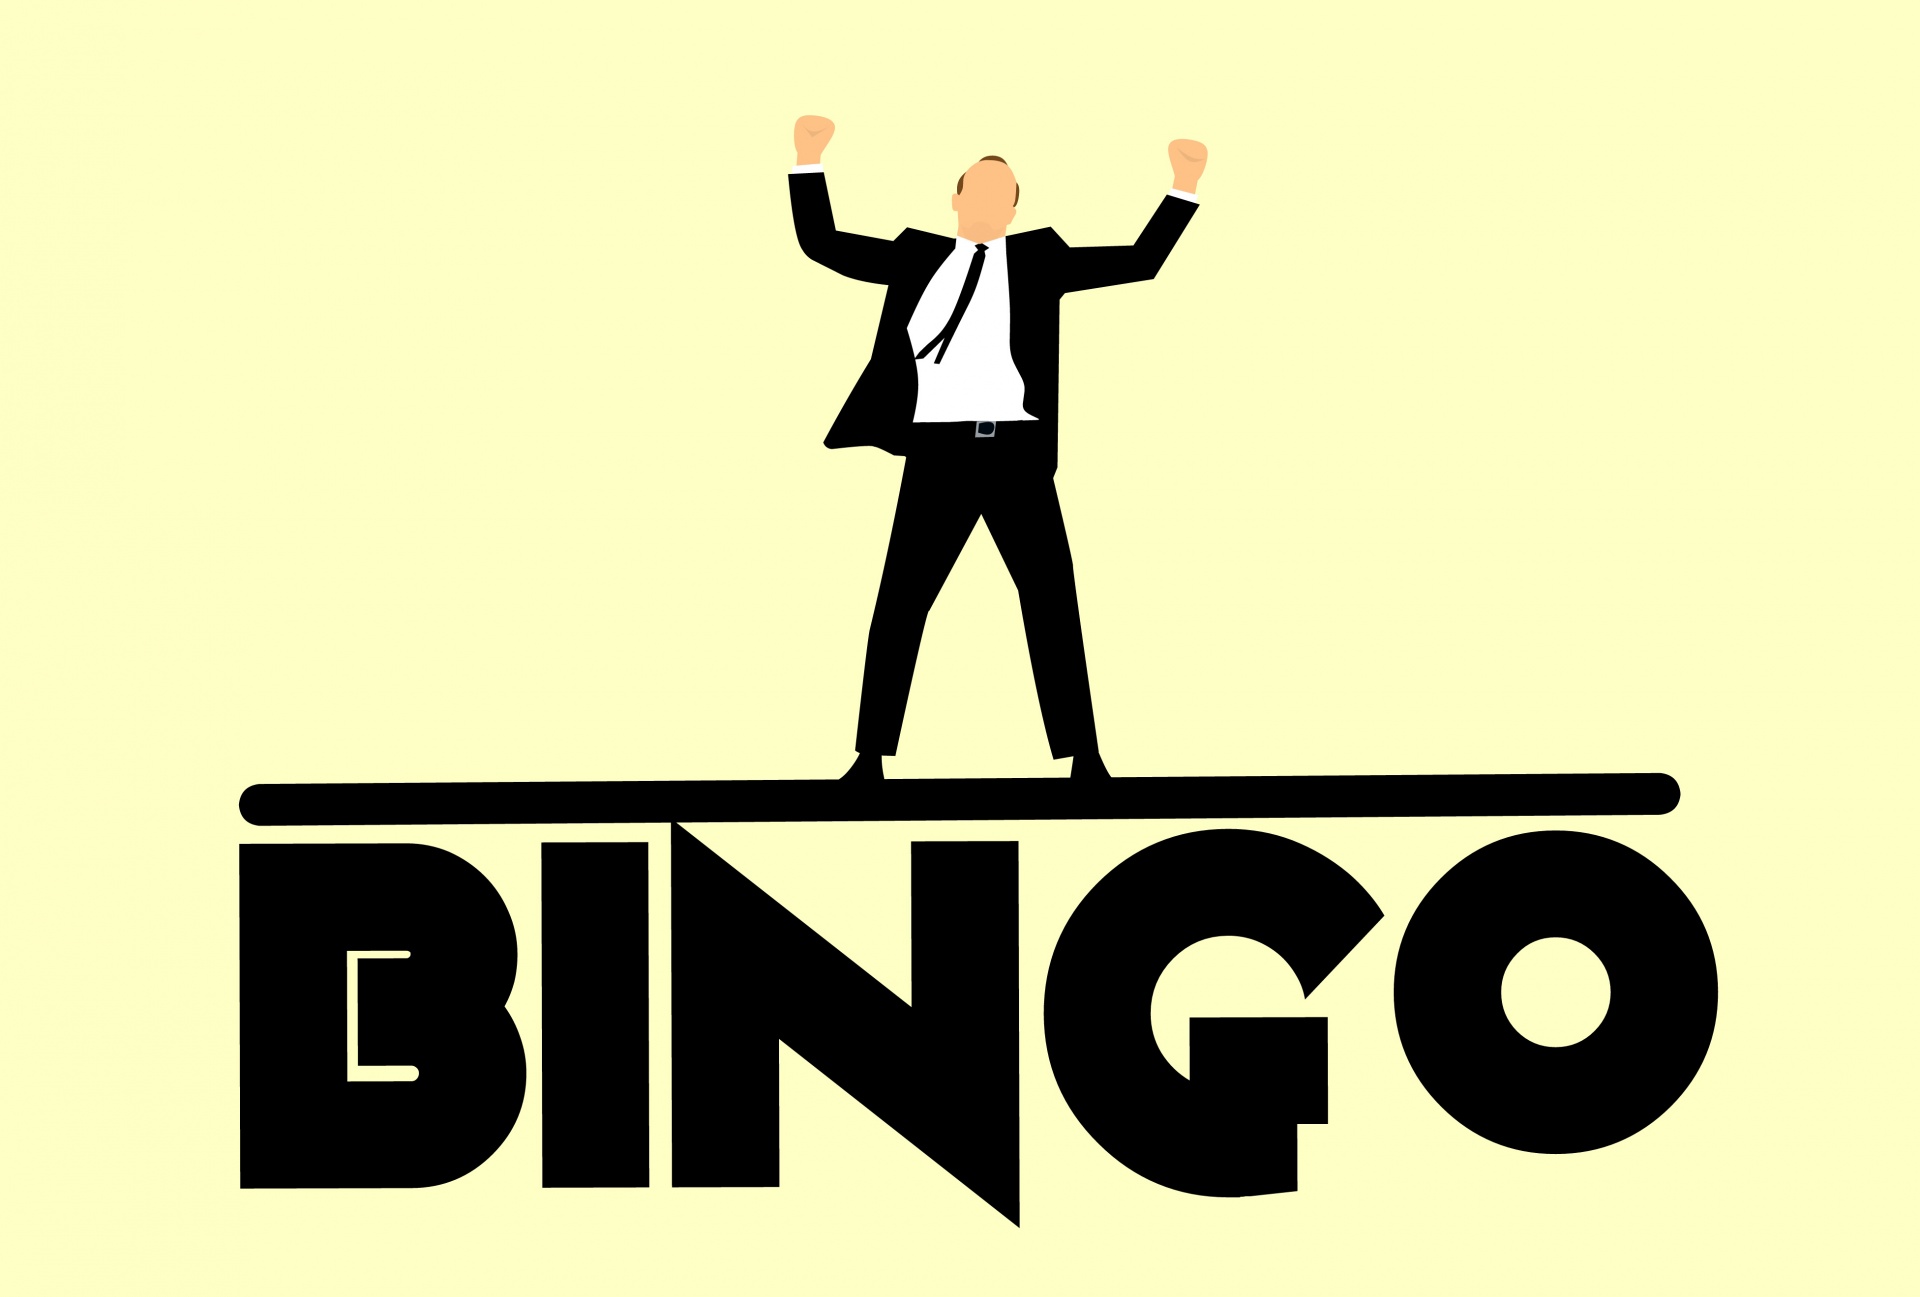 bingo winner